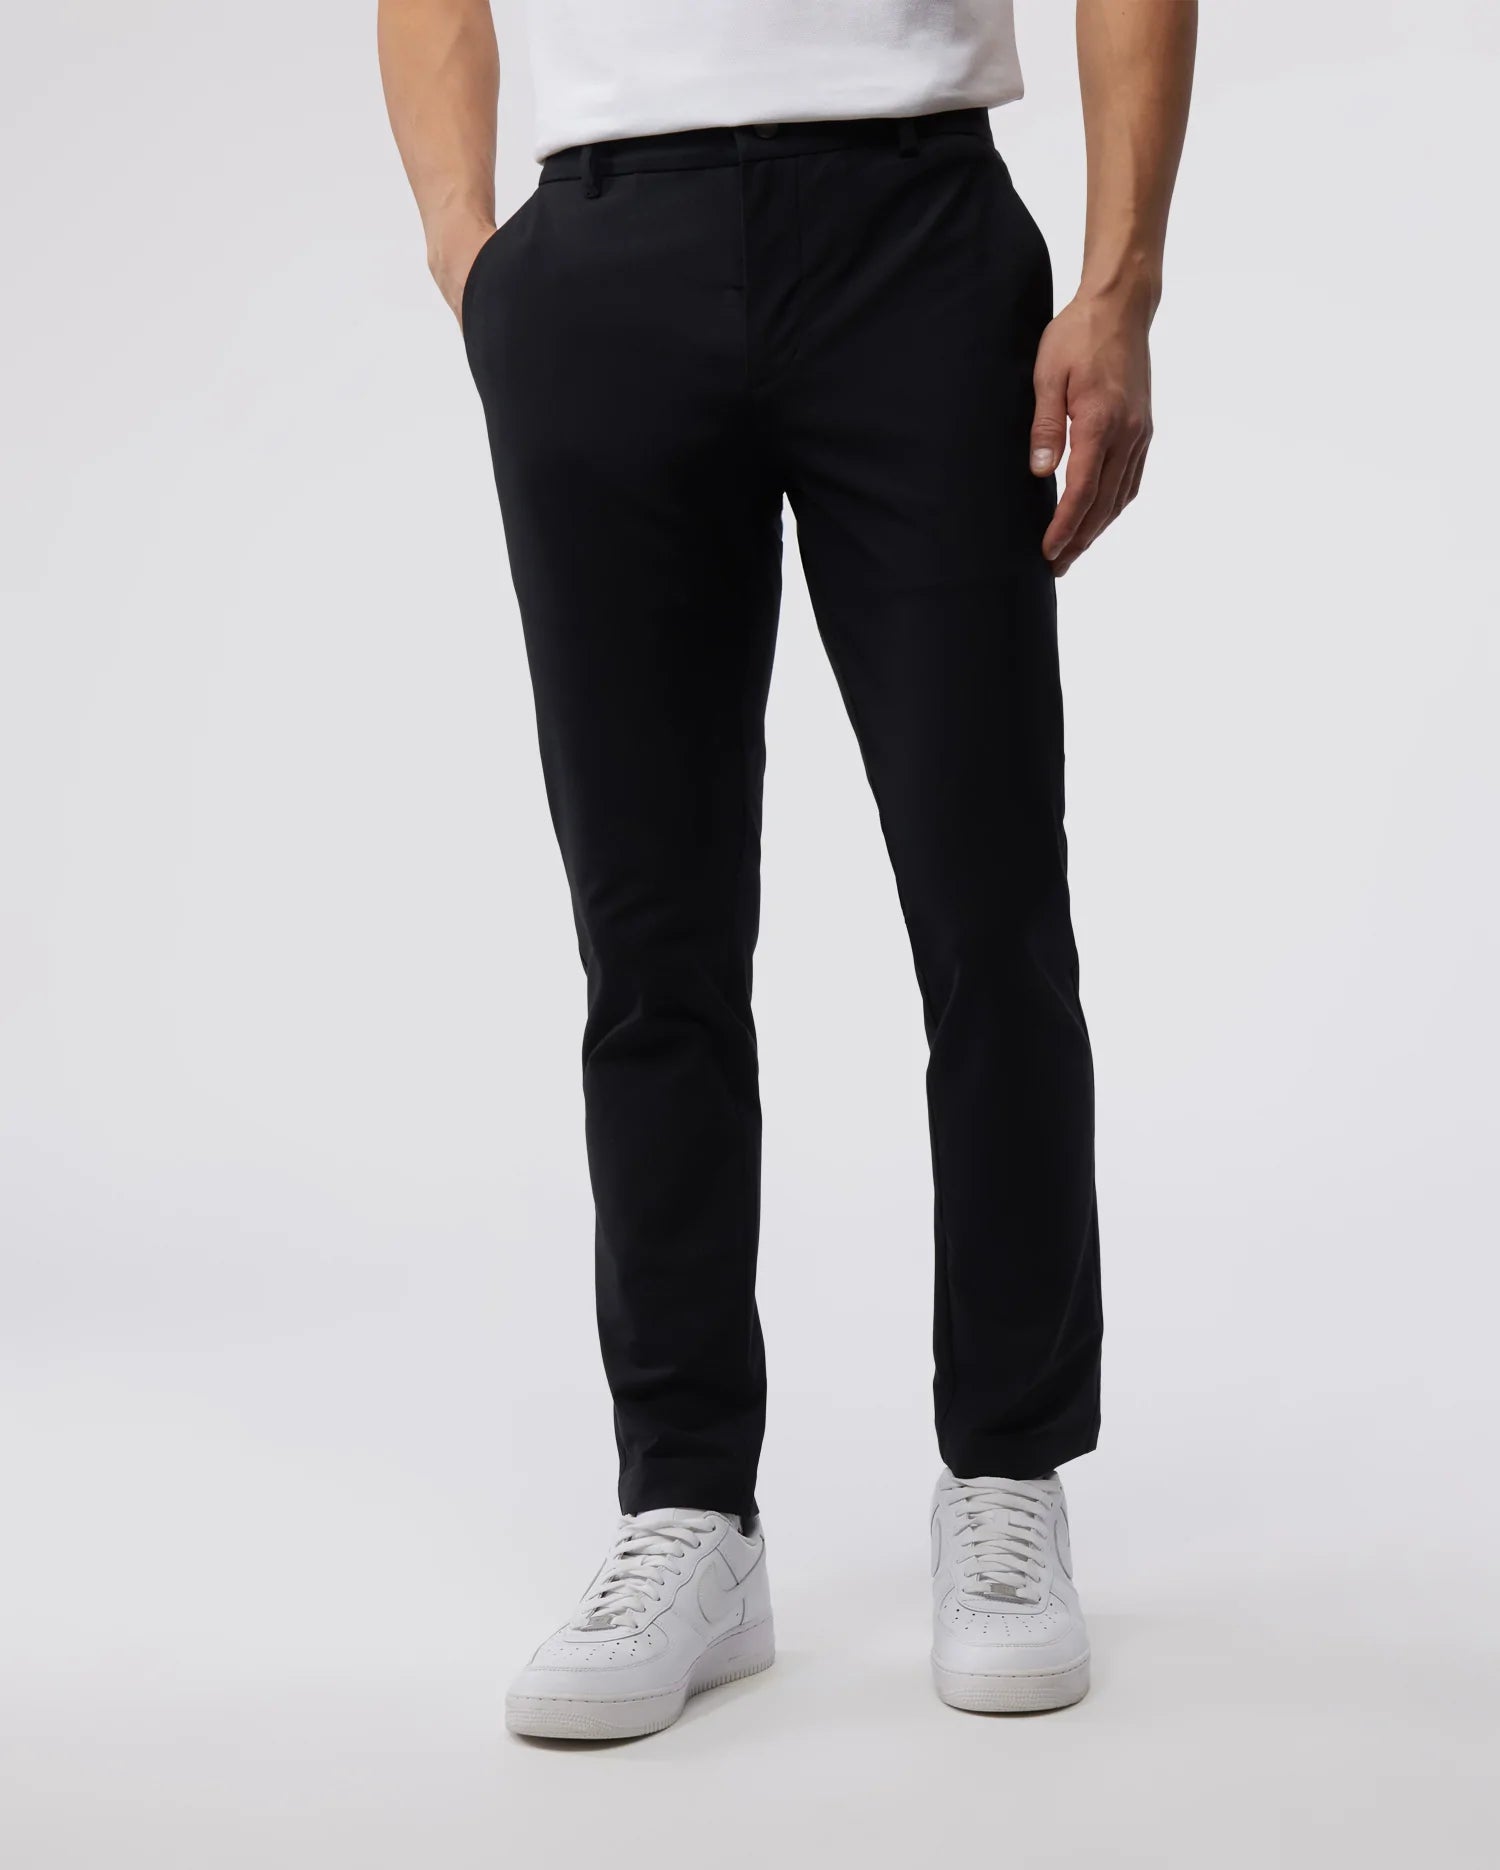 Mens Boys Slim Fit Cotton Chinos Trousers Casual Wear Fly Zip Regular Tan  Pants | eBay